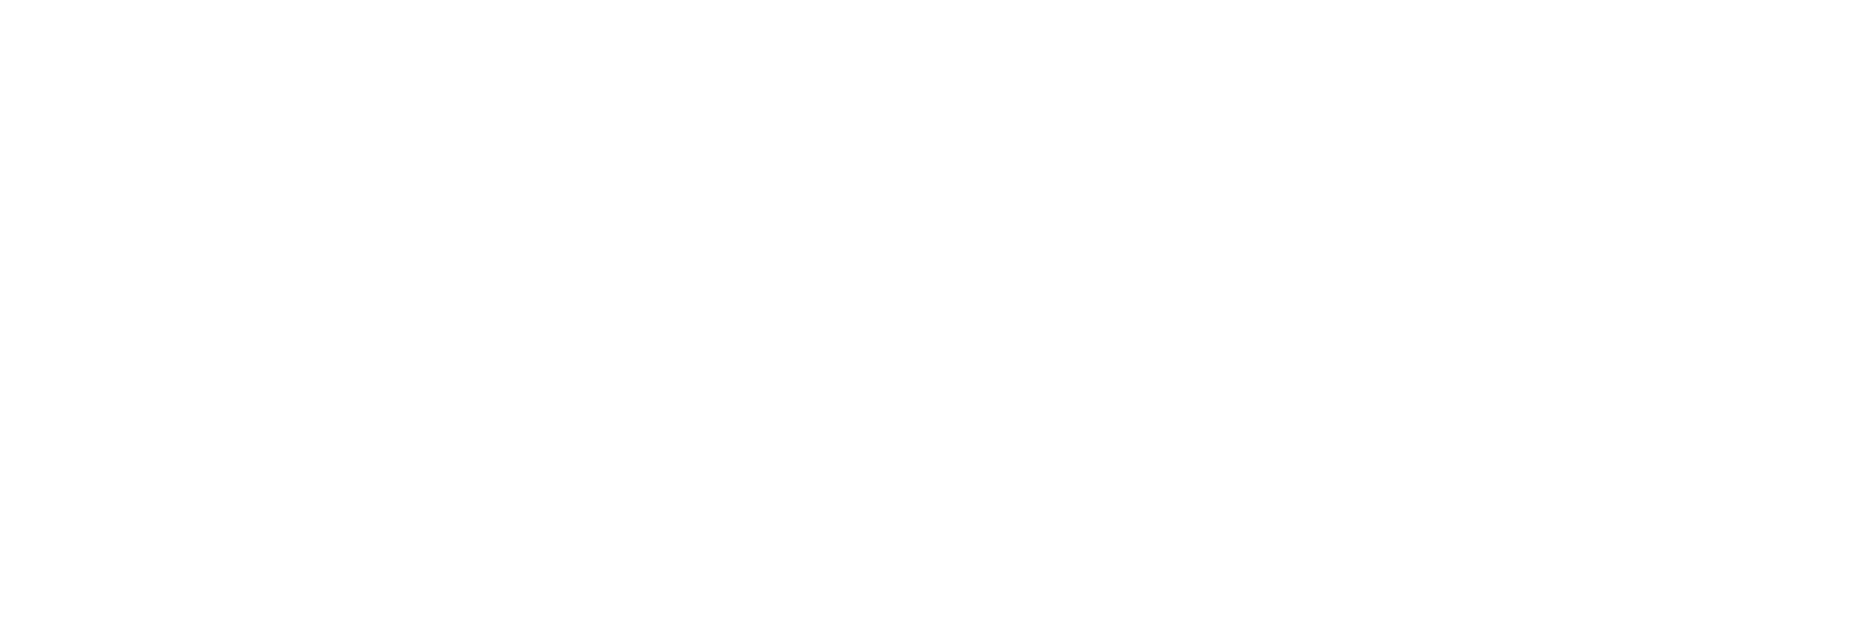 Microsoft ads logo